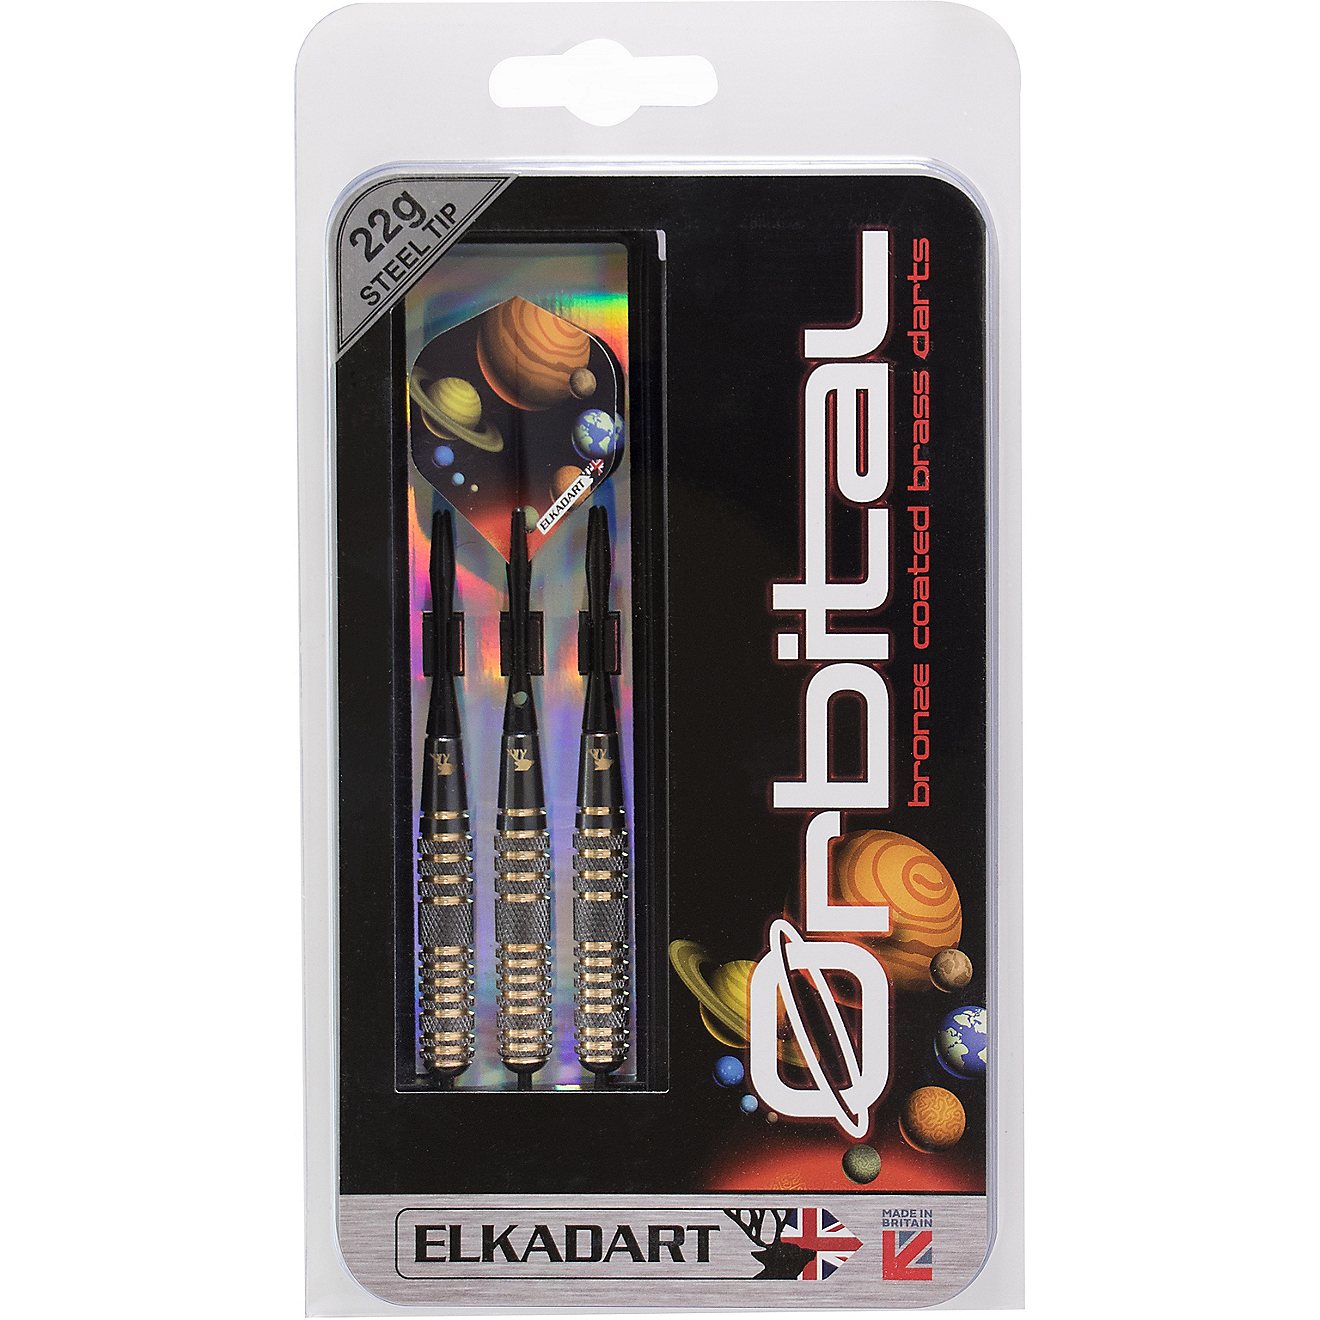 Elkadart Orbital 22 g Steel-Tip Darts                                                                                            - view number 4